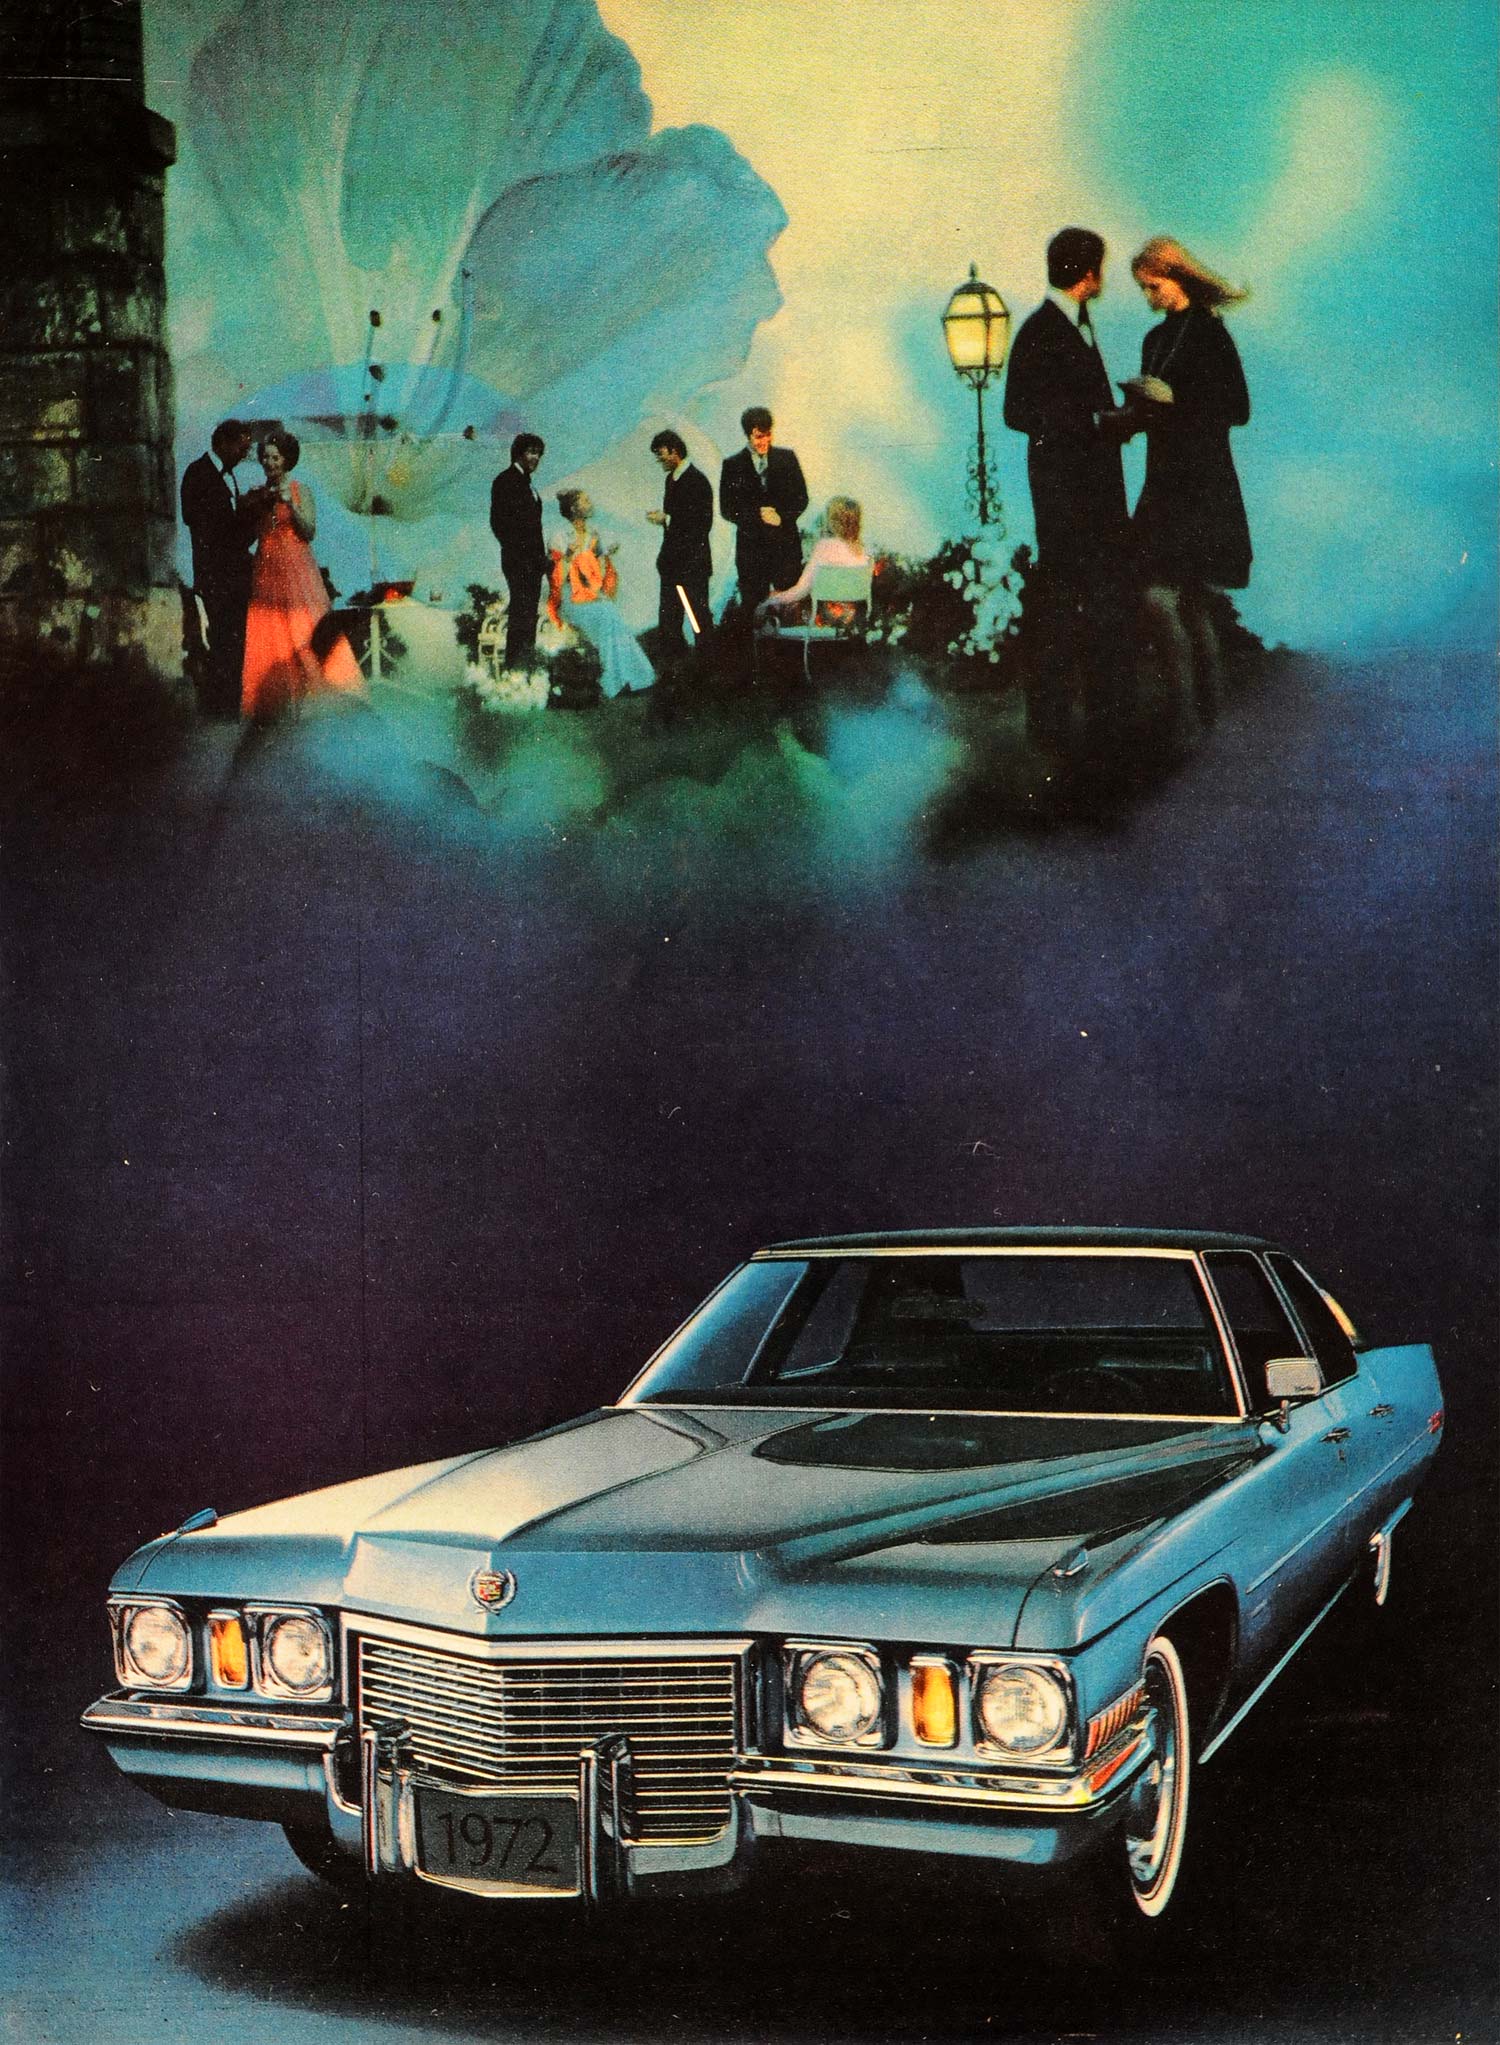 1971 Ad 1972 Cadillac Dinner Party Garden Automobile - ORIGINAL ADVERTISING TM3